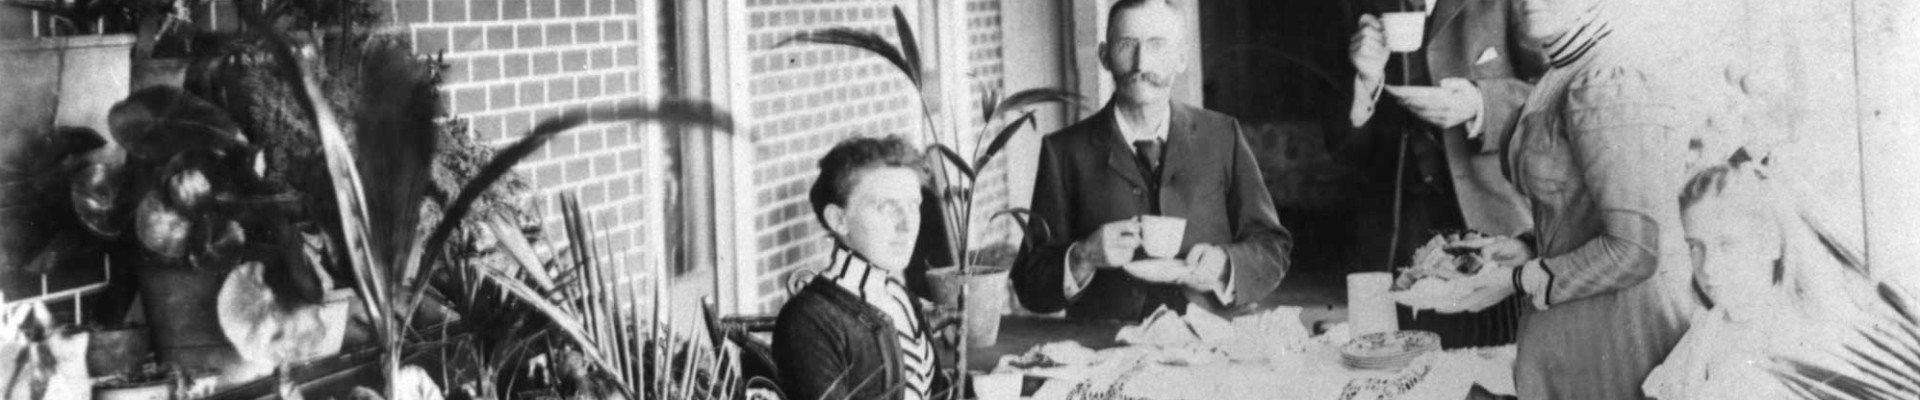 Afternoon tea on the verandah of Sedgley Grange Newmarket Brisbane 1900-1910